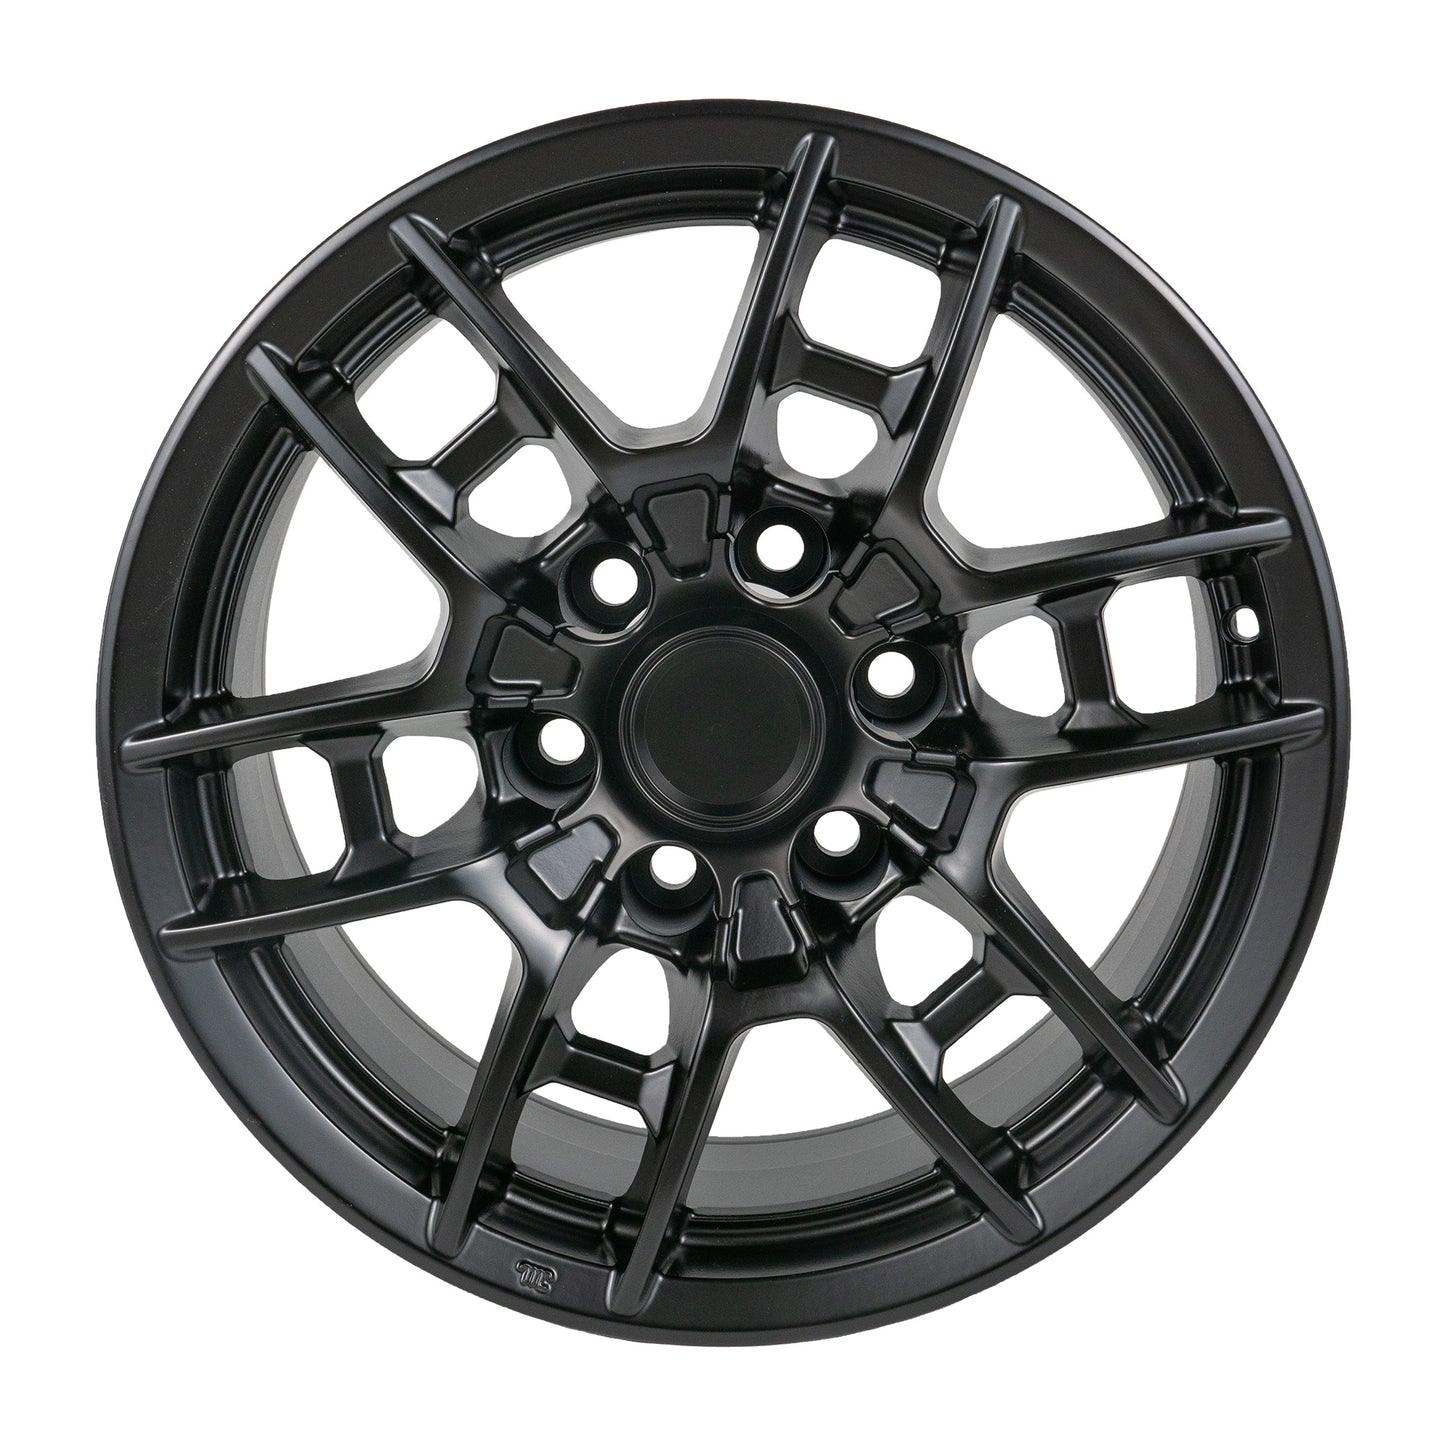 Toyota TRD Wheels 17 x 8/9 Auto Rims PCD 6 x 139.7 ET 15/0 CB 106.1 Set of 4 Matte Black